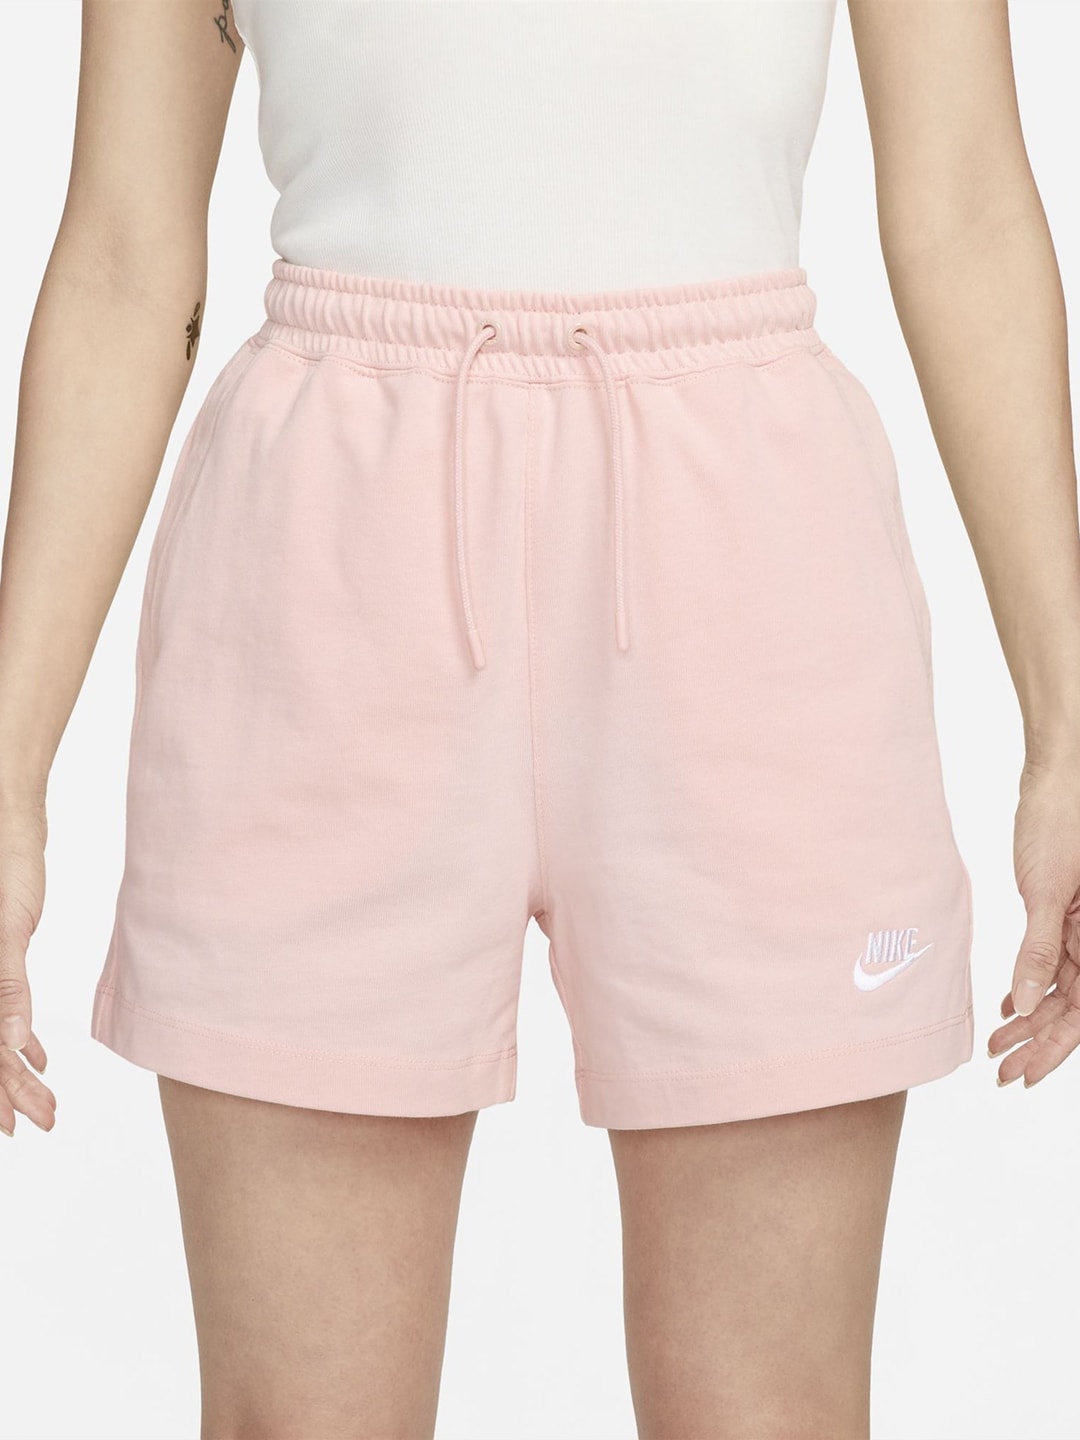 Nike Sportswear Women Logo Printed Jersey Shorts Price in India